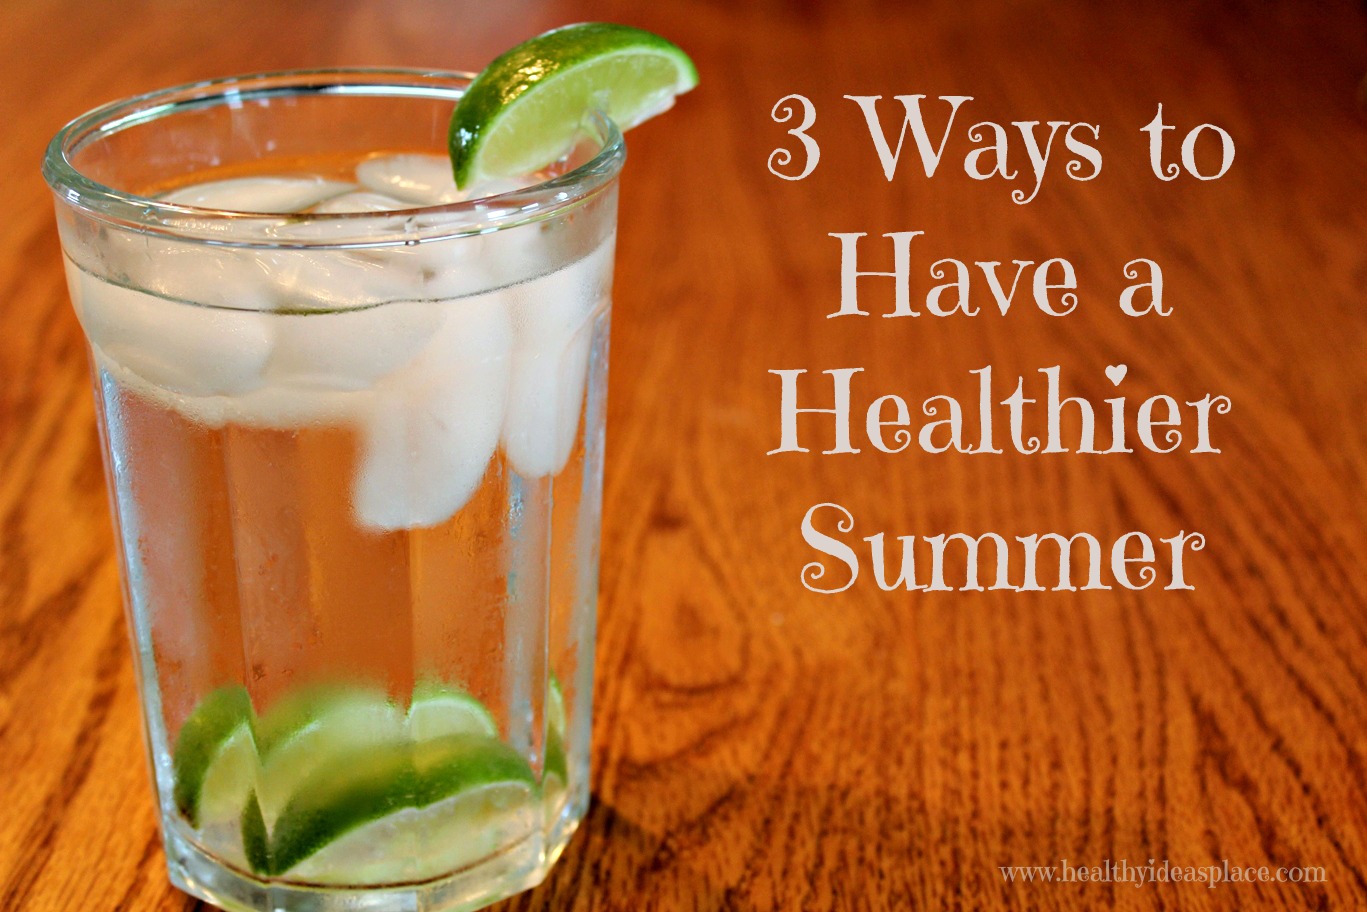 3 Ways to Have a Healthier Summer